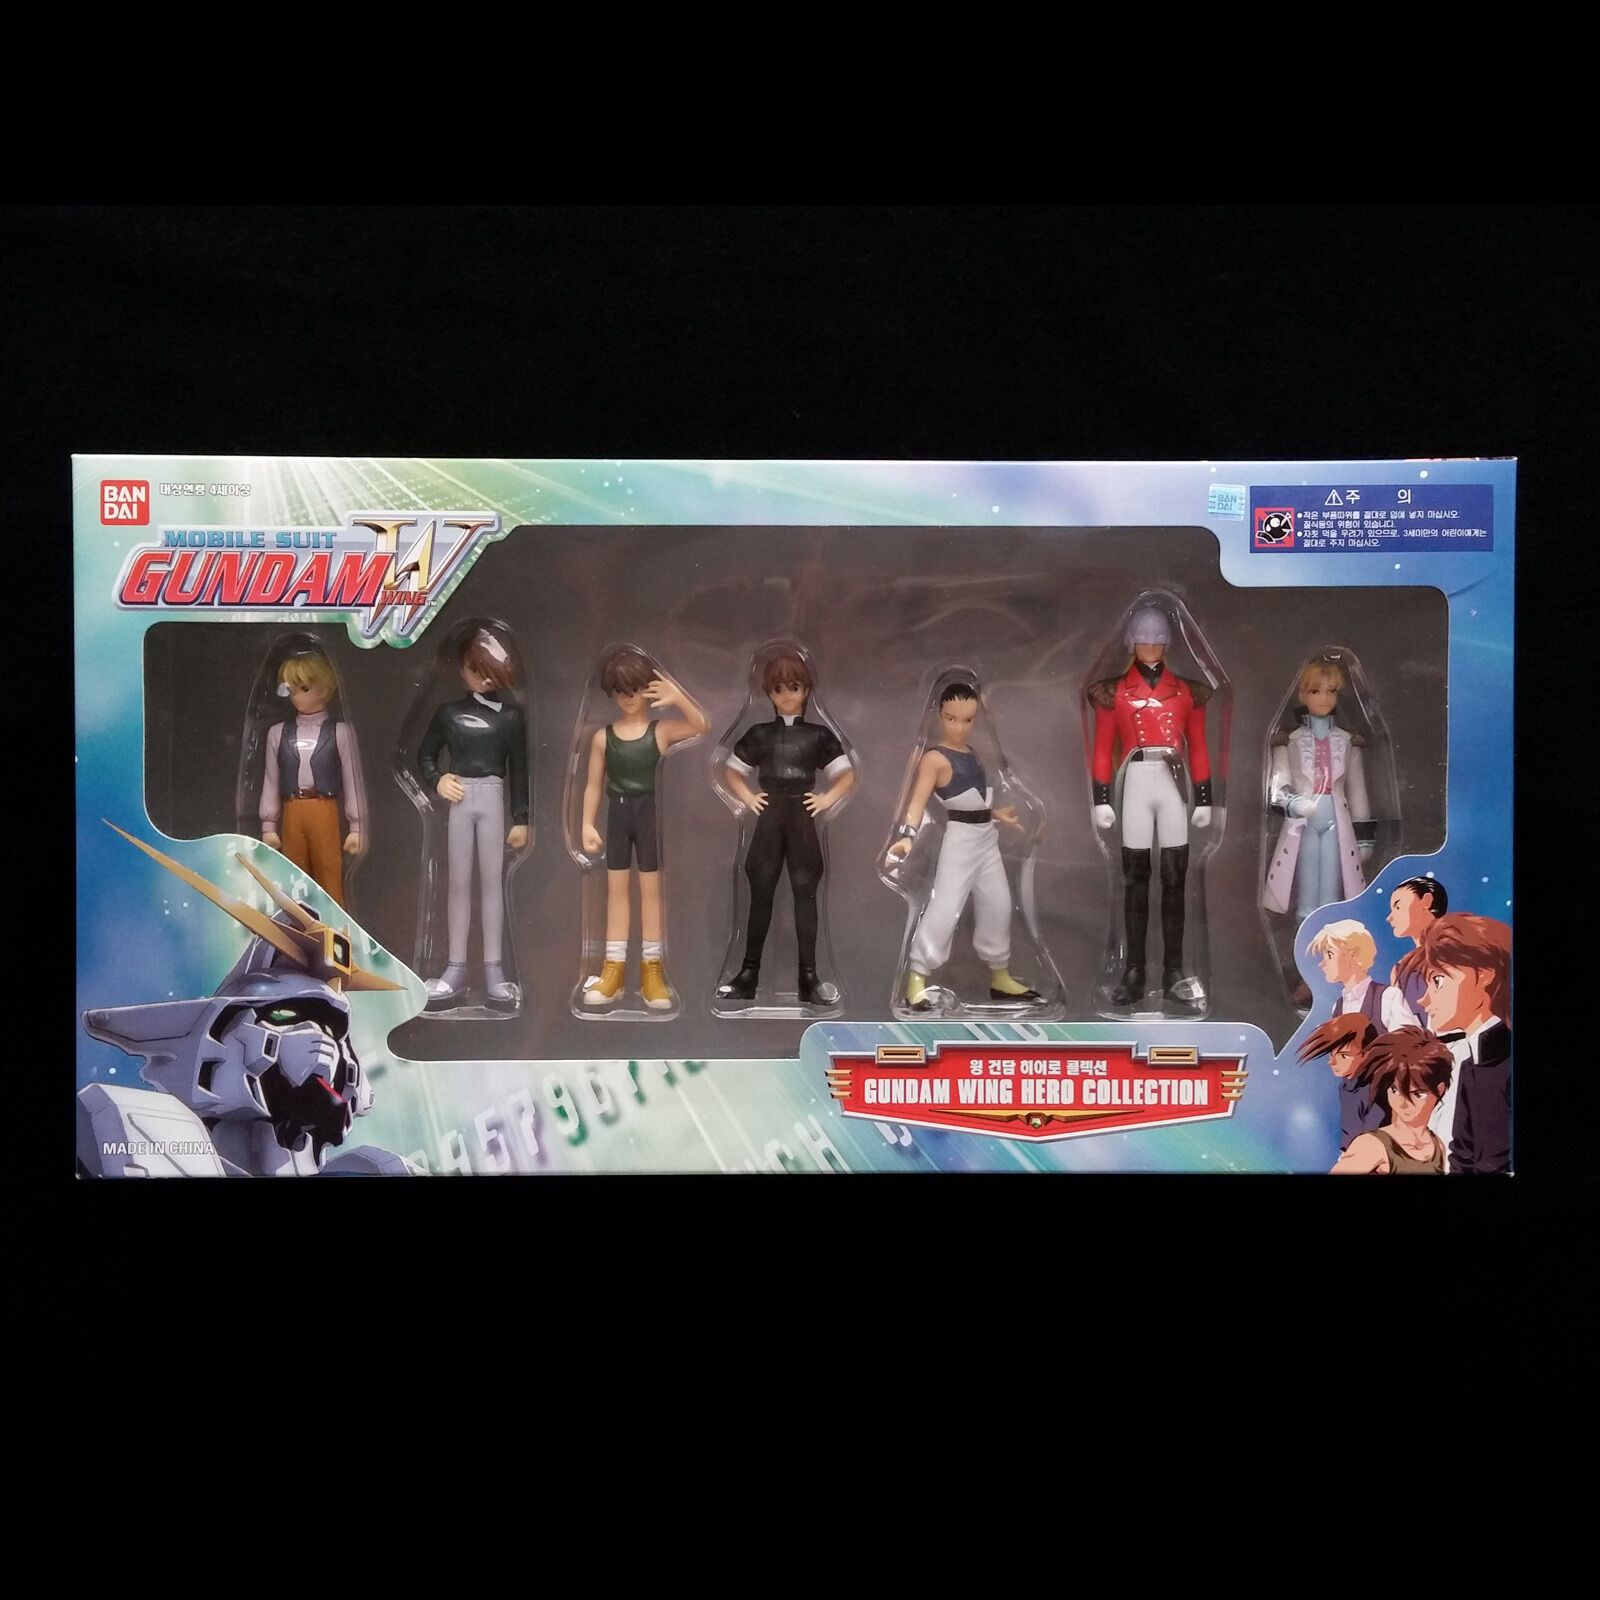 Bandai Mobile Suit Gundam Wing Hero Collection Figure Set 7-Figures New 2002